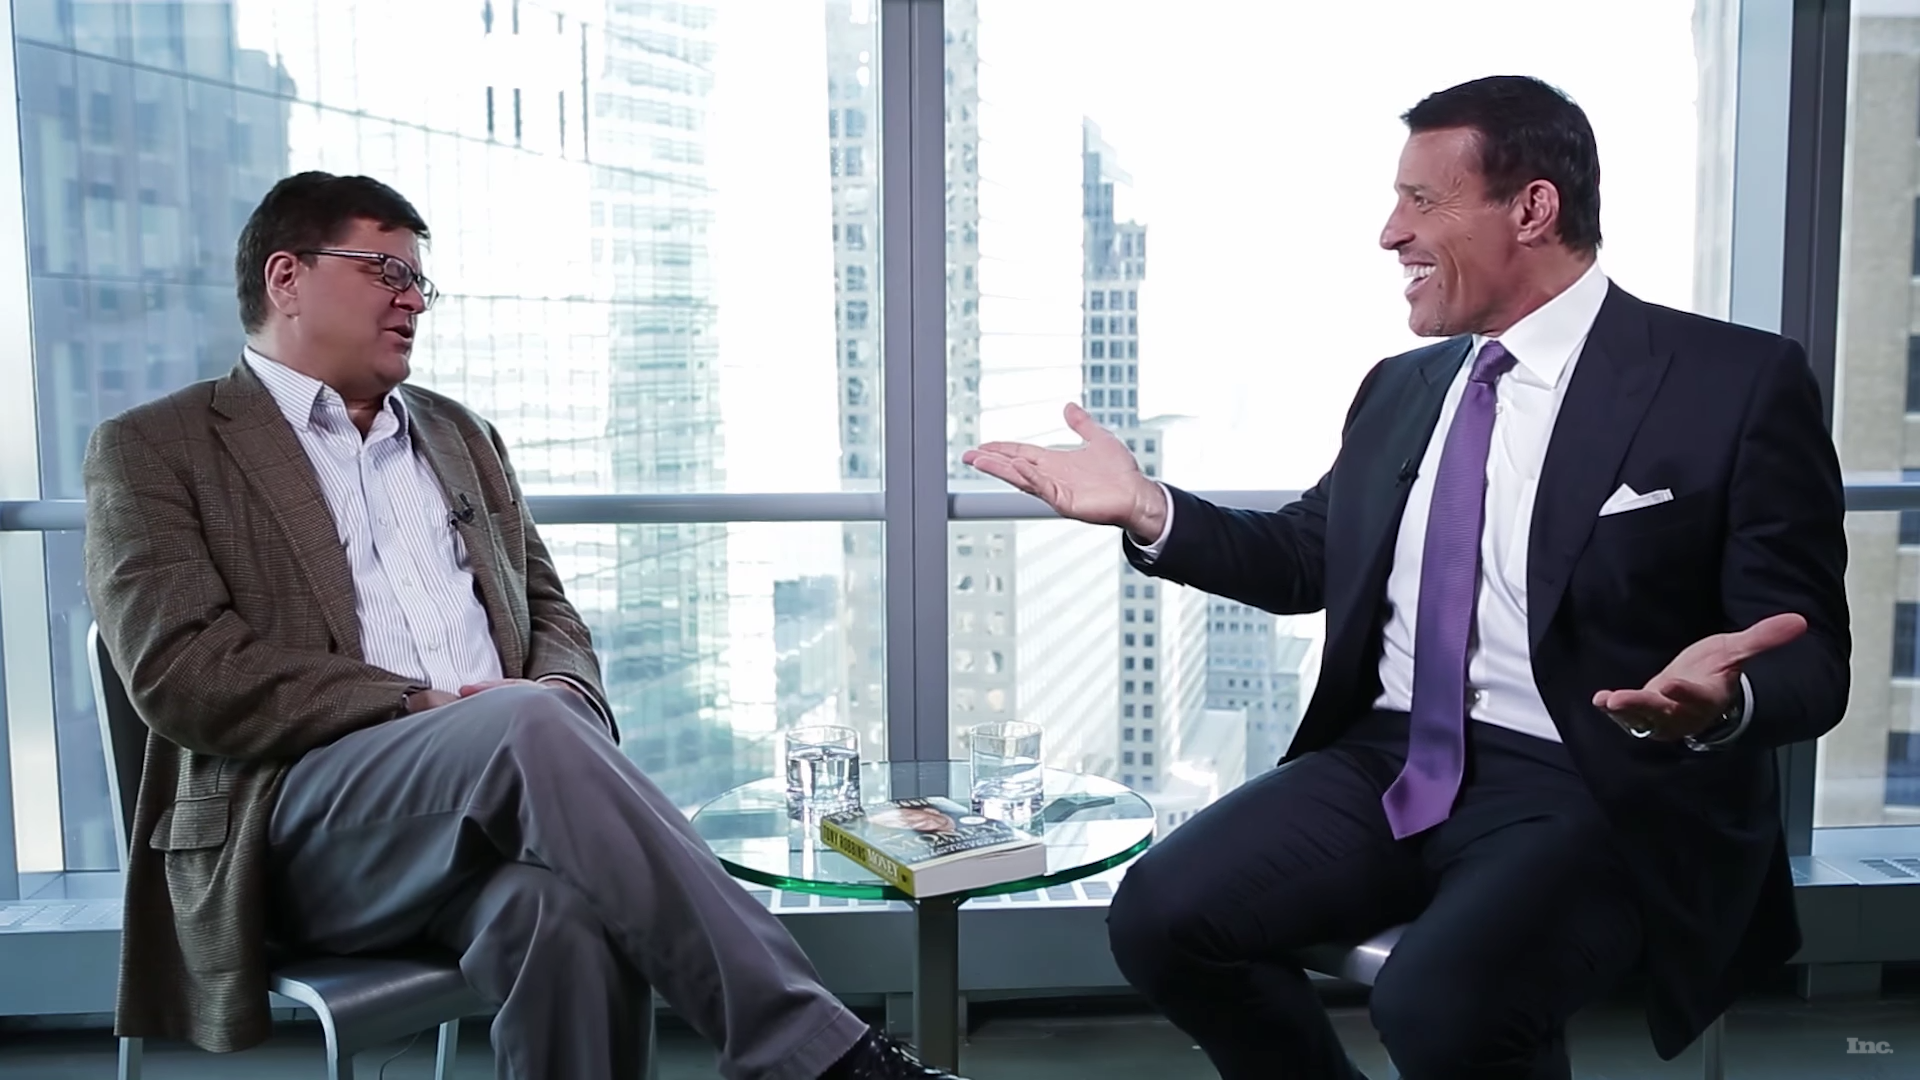 Tony Robbins speaking to Inc. editor James Ledbetter. Photo by: Inc. / YouTube